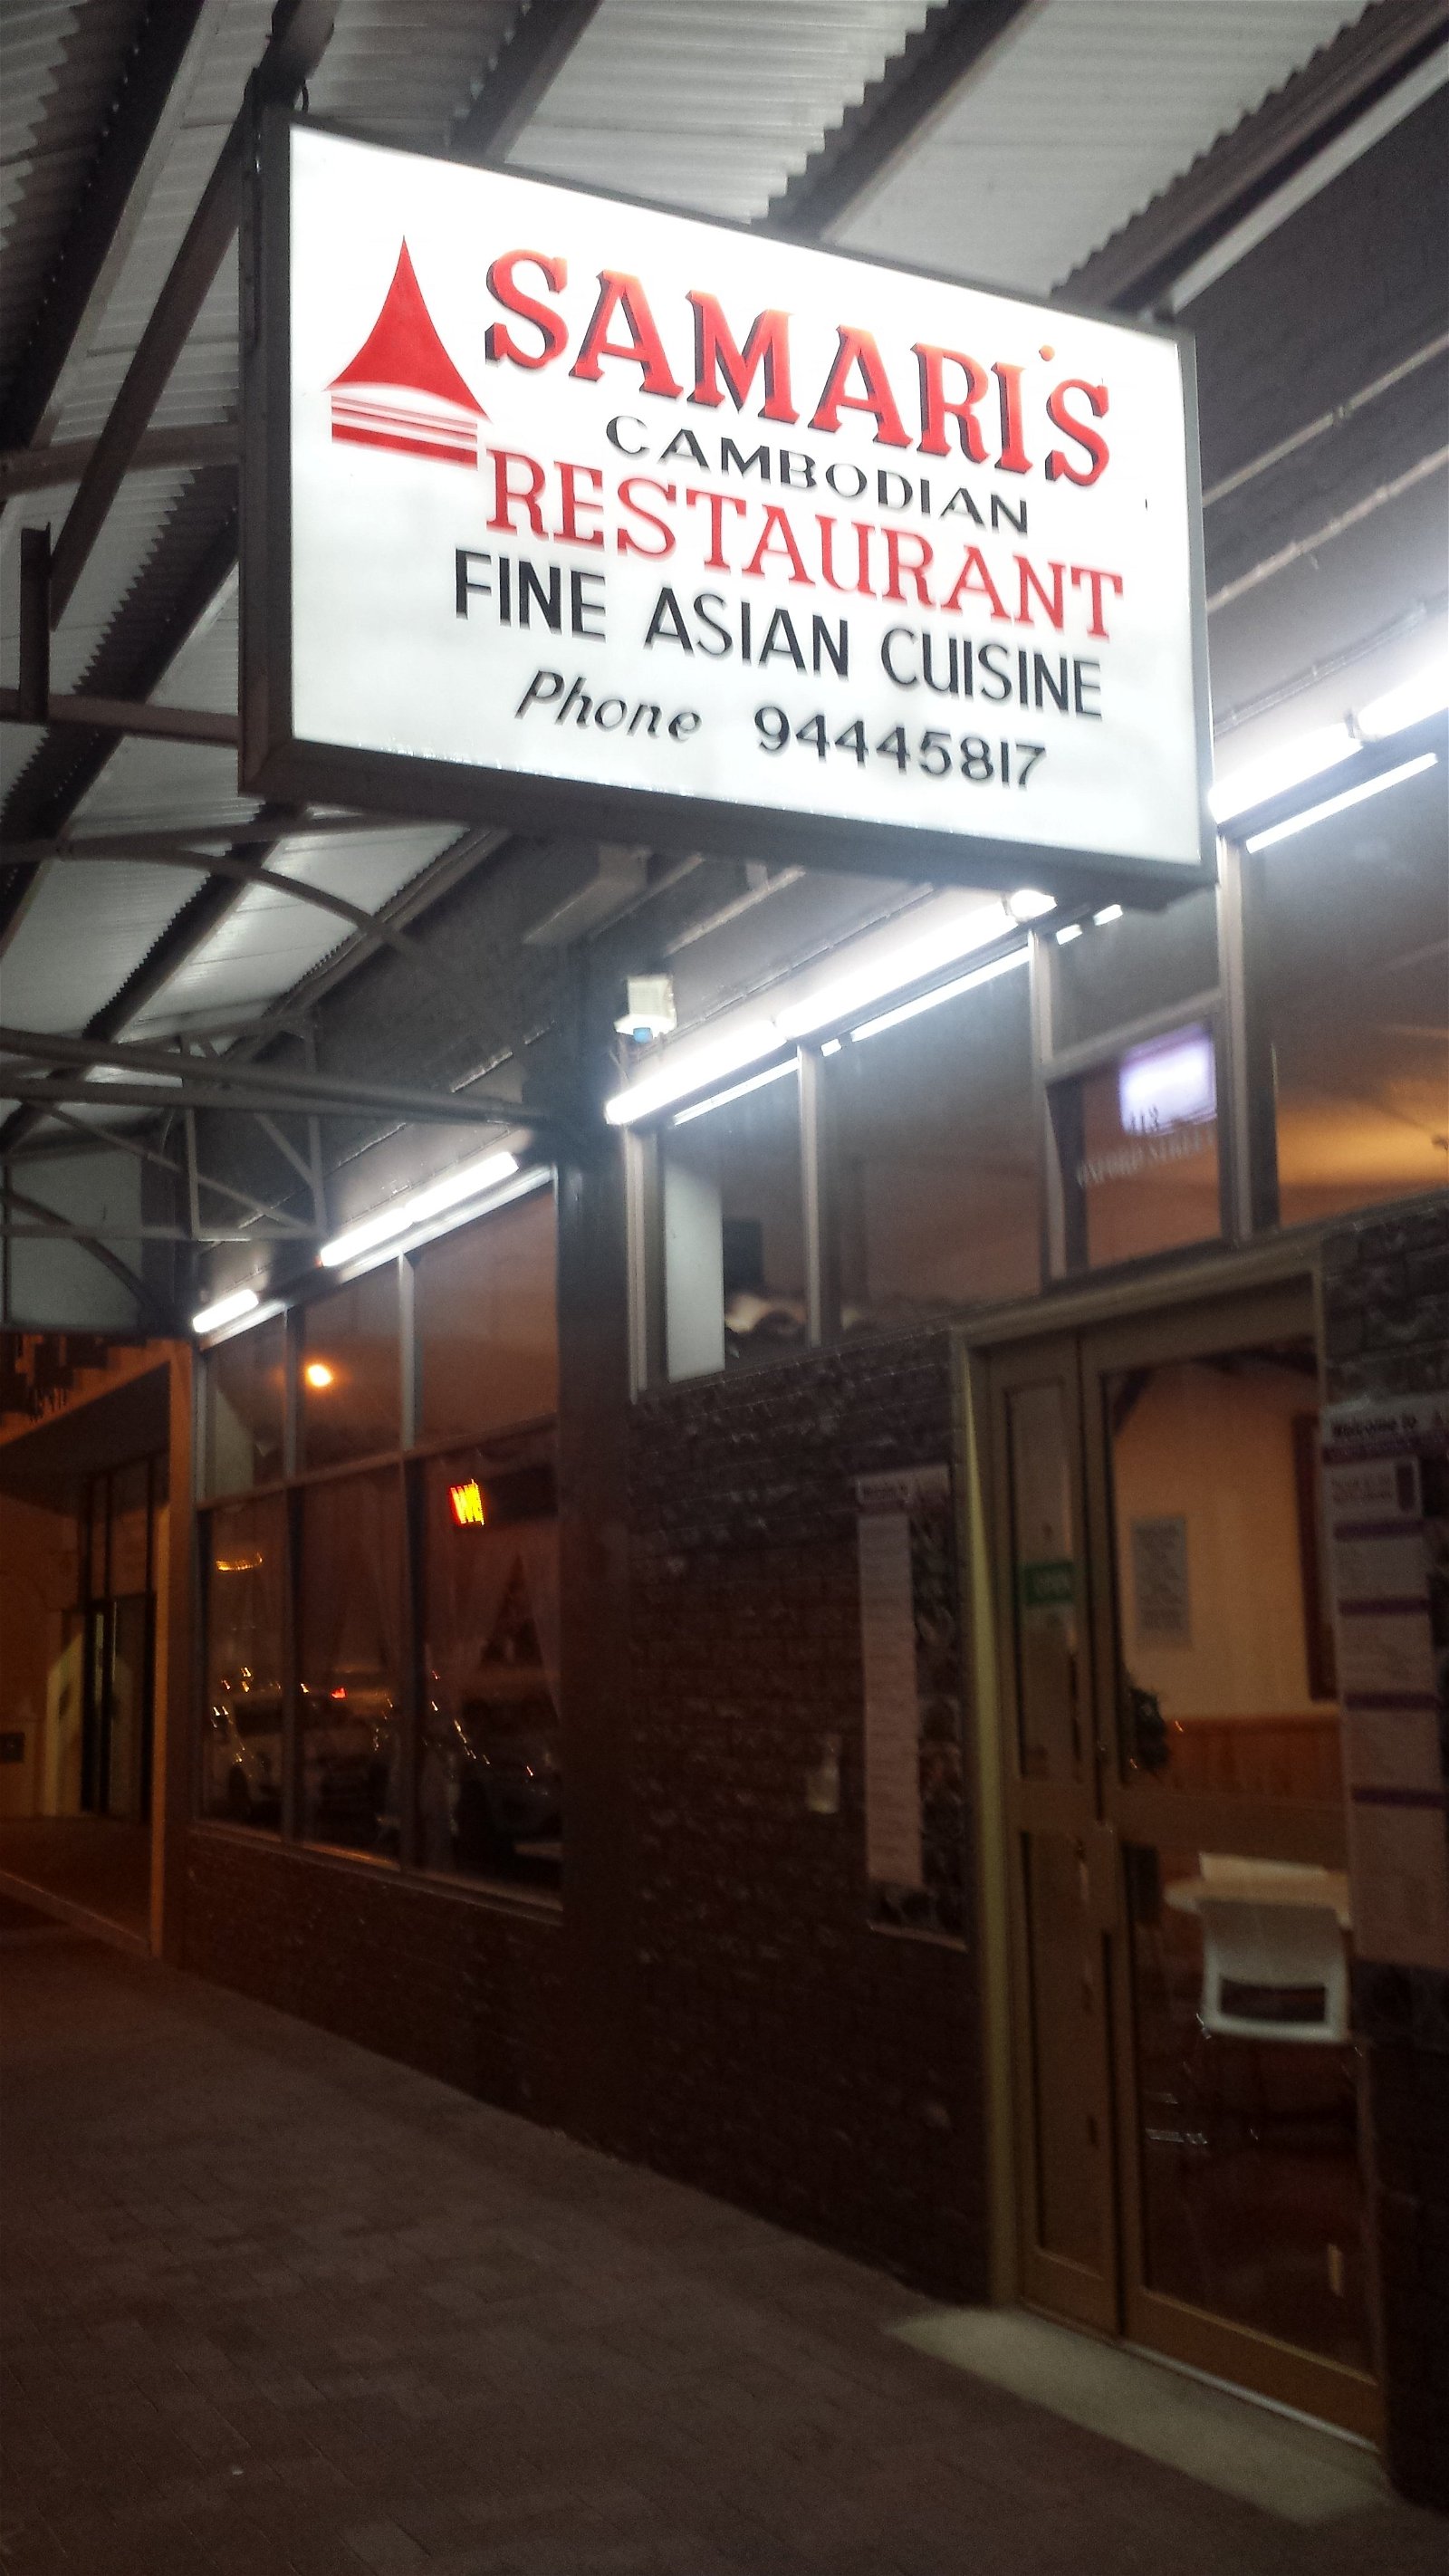 Samari's Restaurant Fine Asian Cuisine - thumb 1